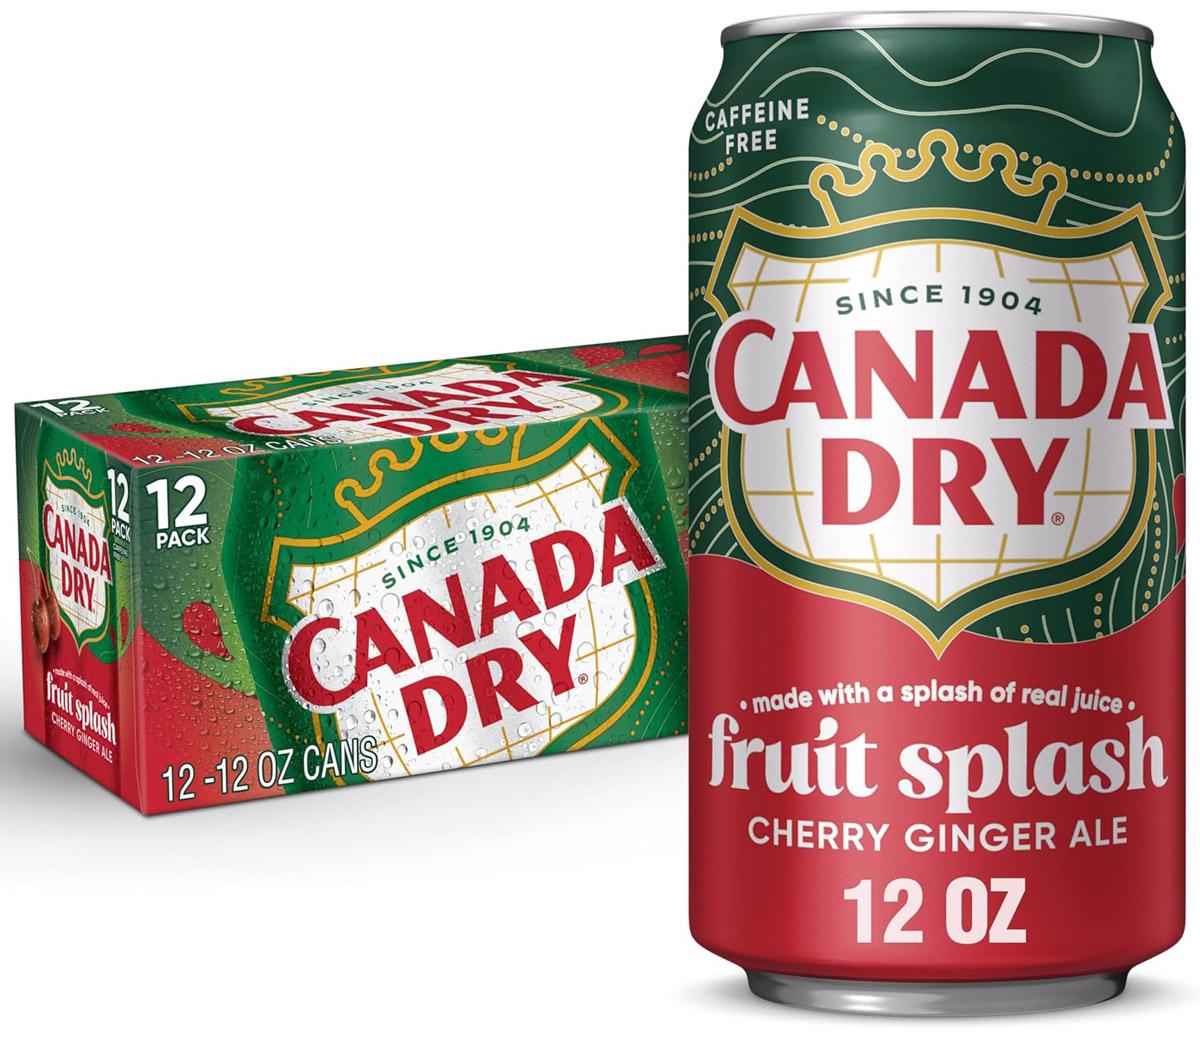 Canada Dry Cherry Gingerale Fruit Splash 36 Pack for $11.53